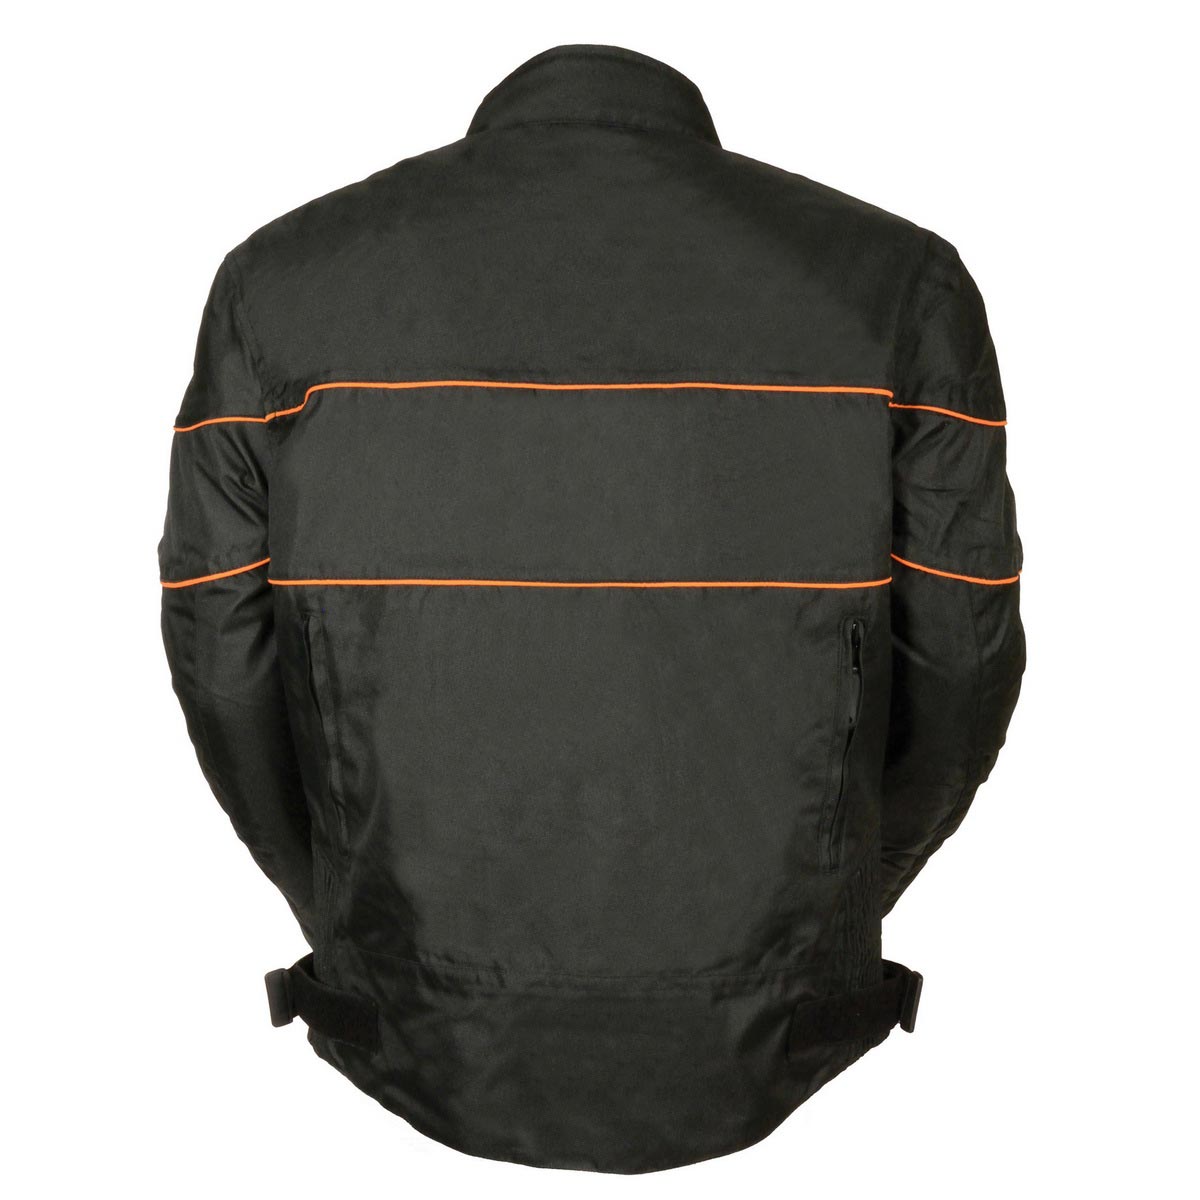 Milwaukee Leather Men's Scooter Style Textile Jacket w/ Orange Stripes  Black - image 3 of 7